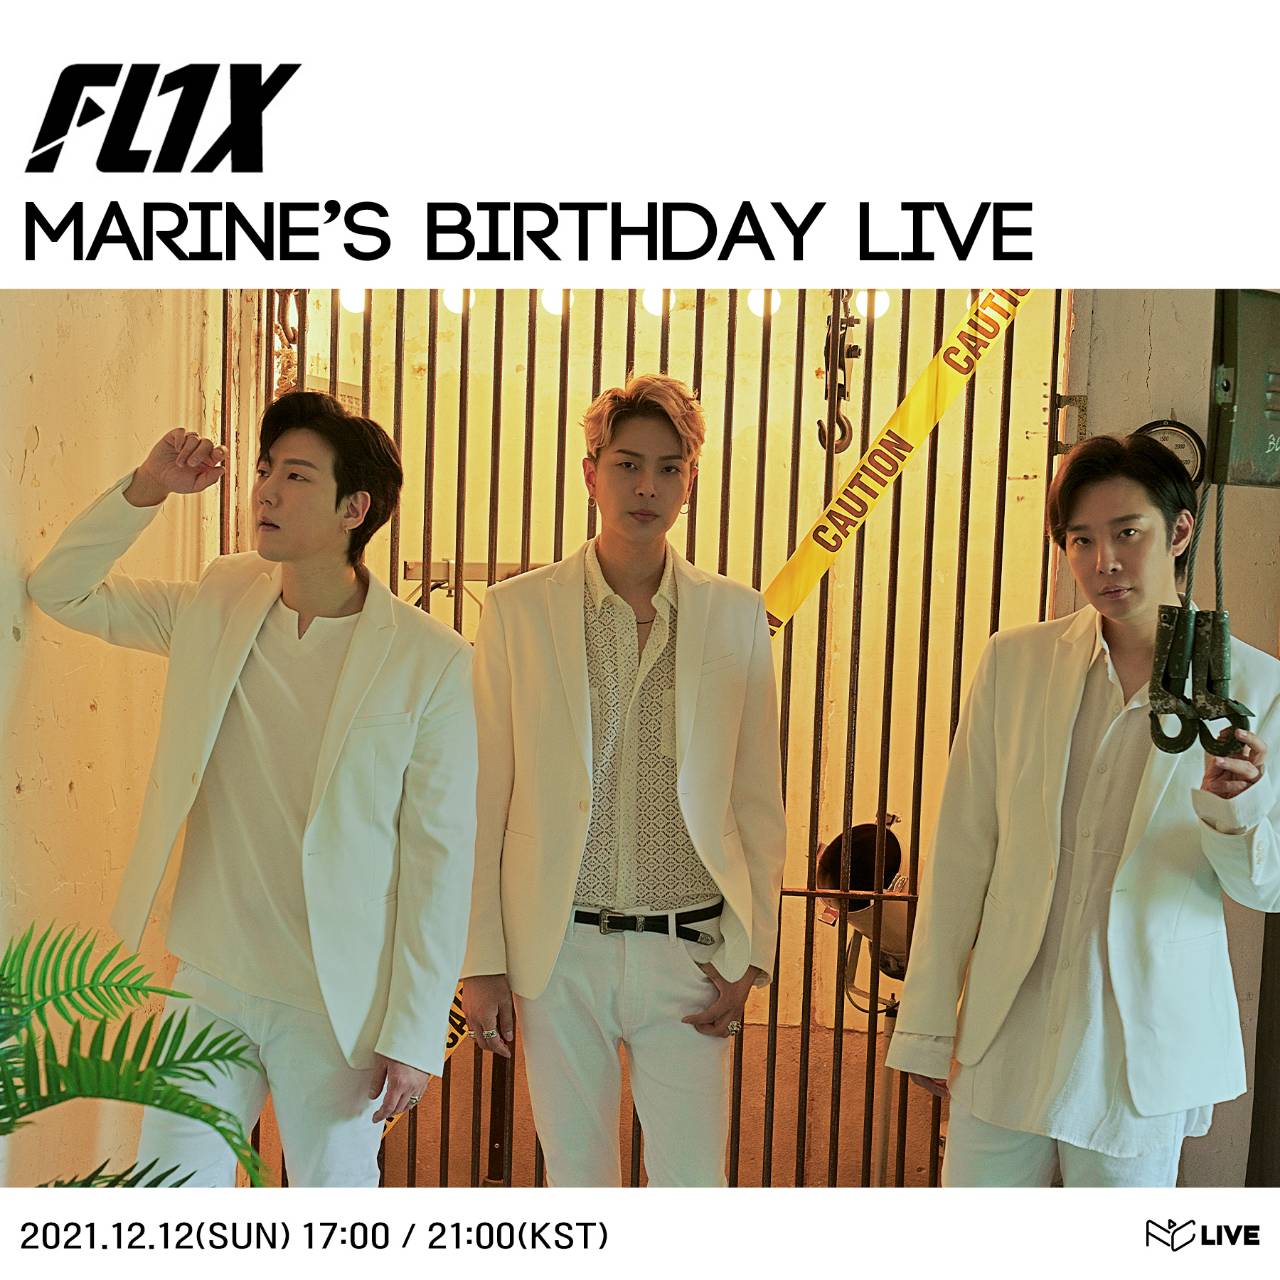 FL1X MARINE’S BIRTHDAY ONLINE LIVE [show1]